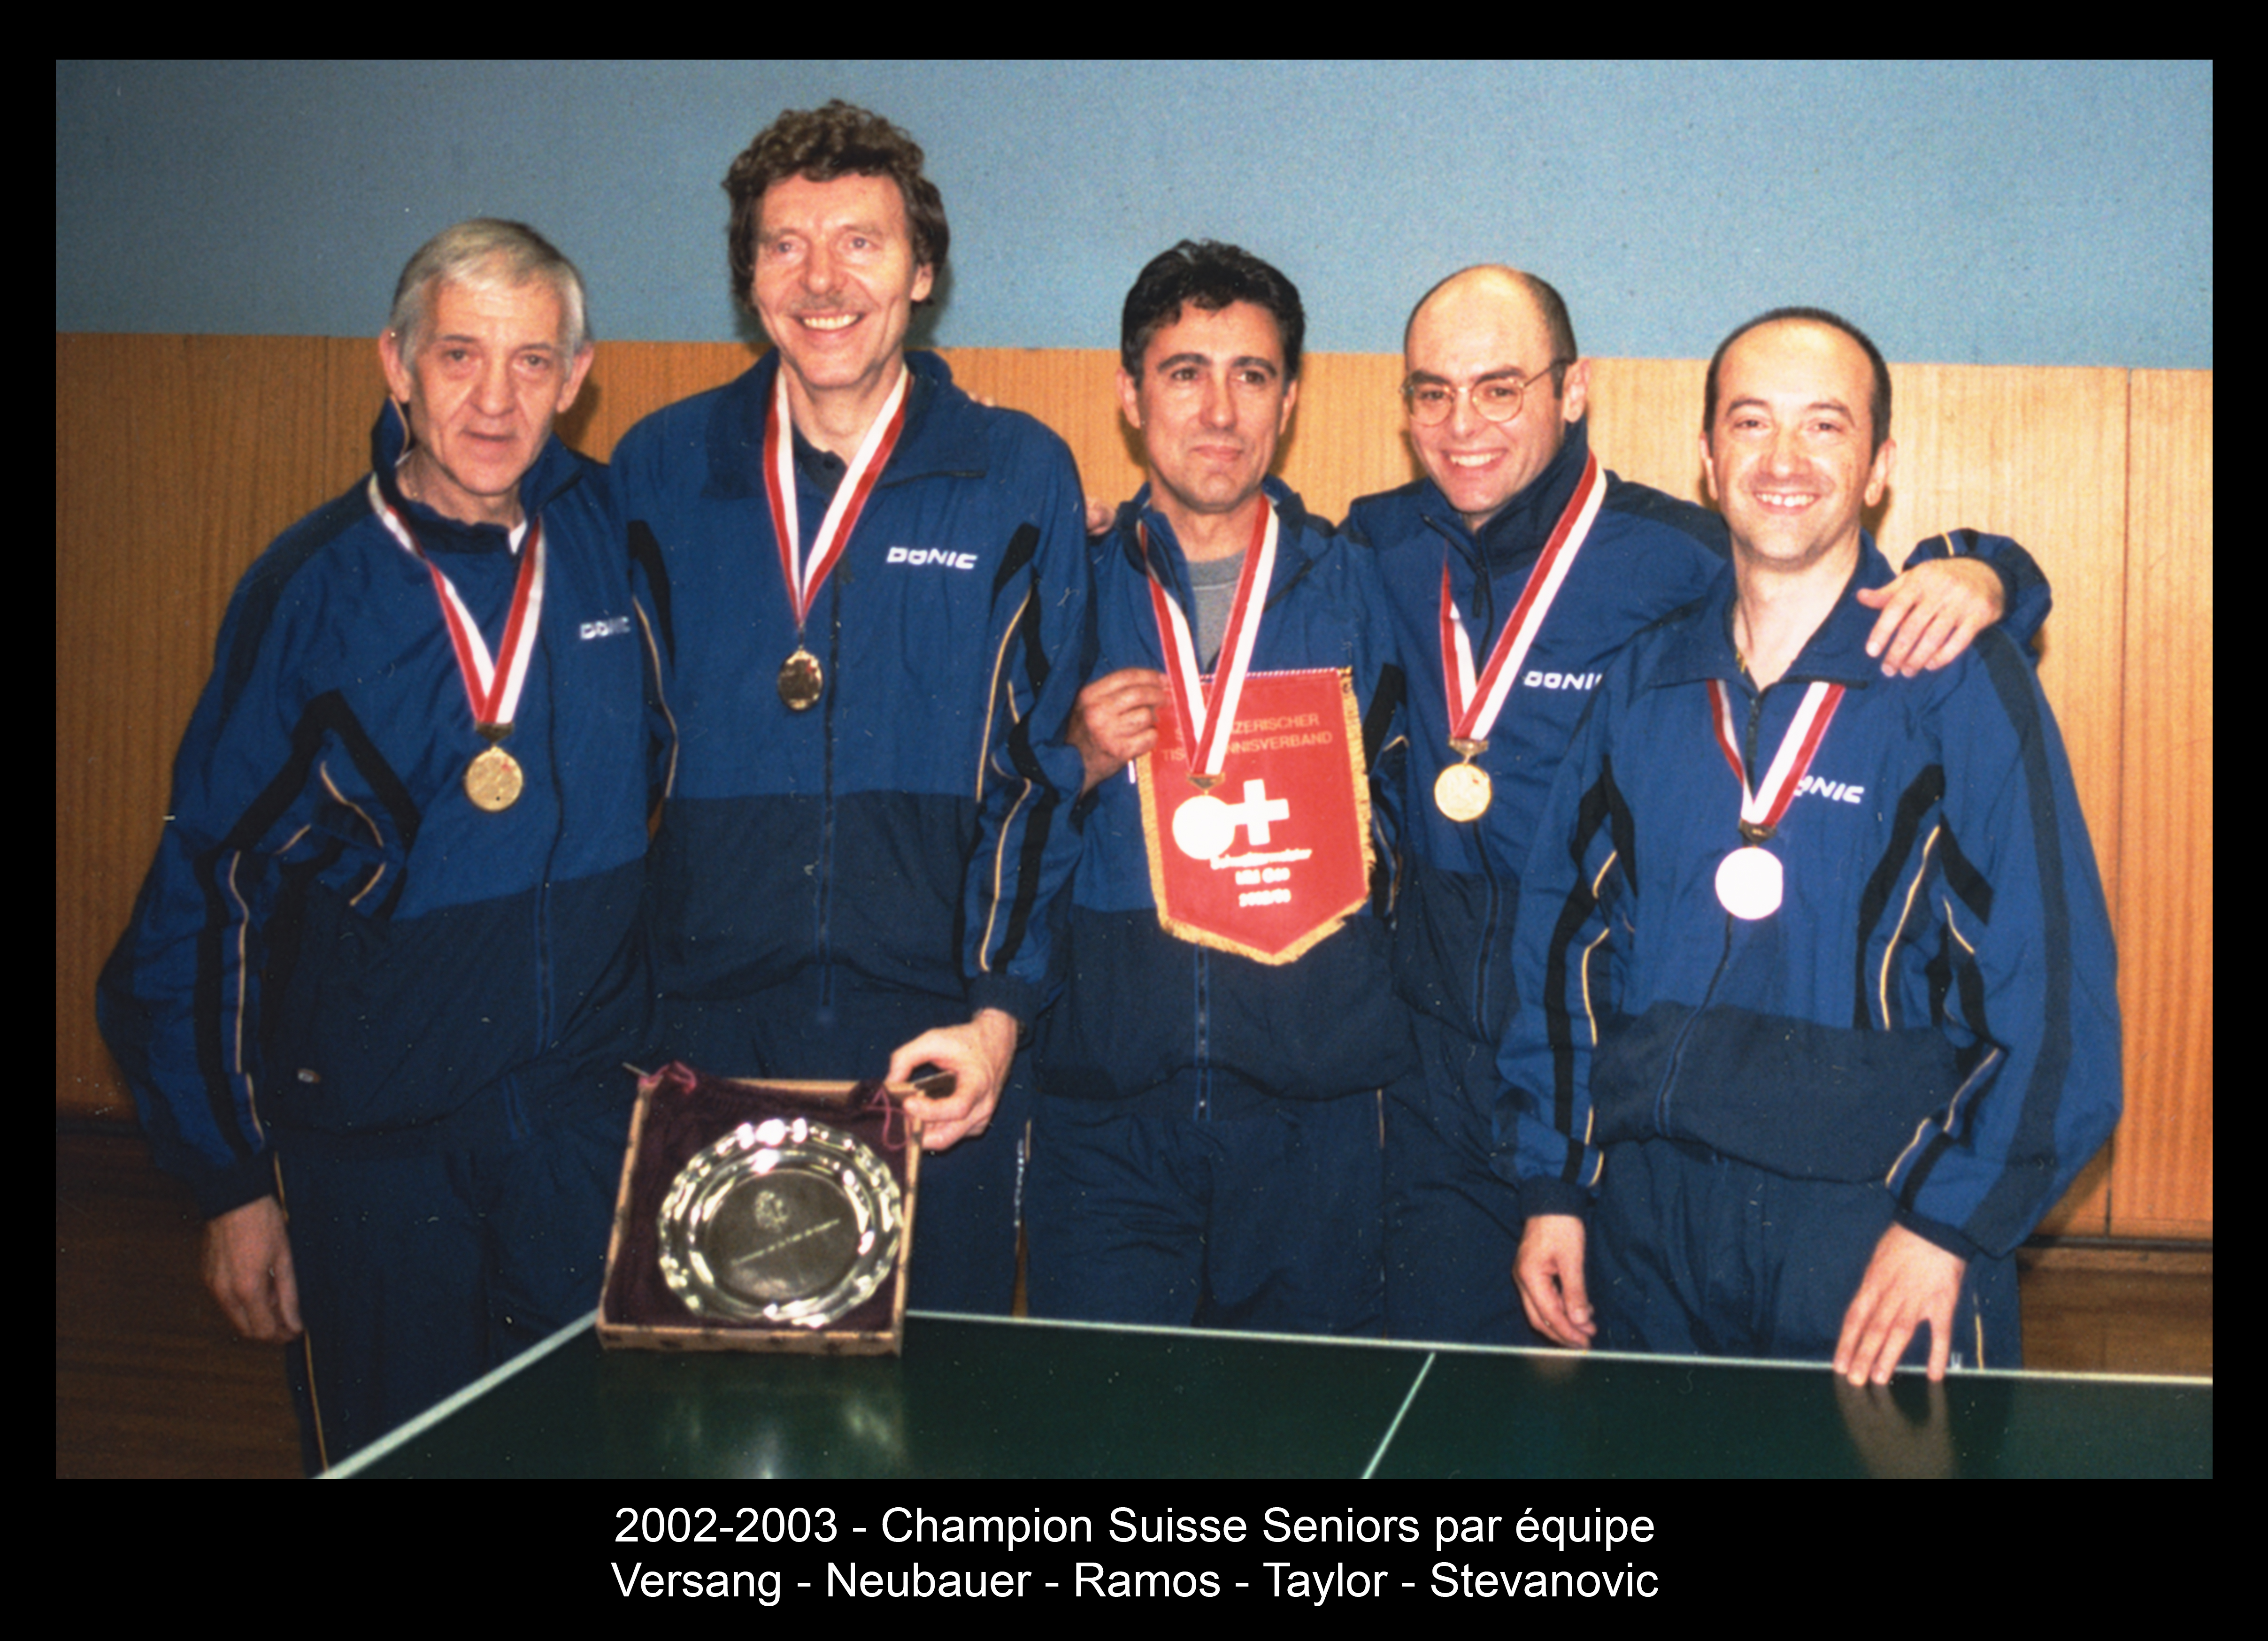 2002-2003 - Champion Suisse Seniors par équipe - Versang - Neubauer - Ramos - Taylor - Stevanovic